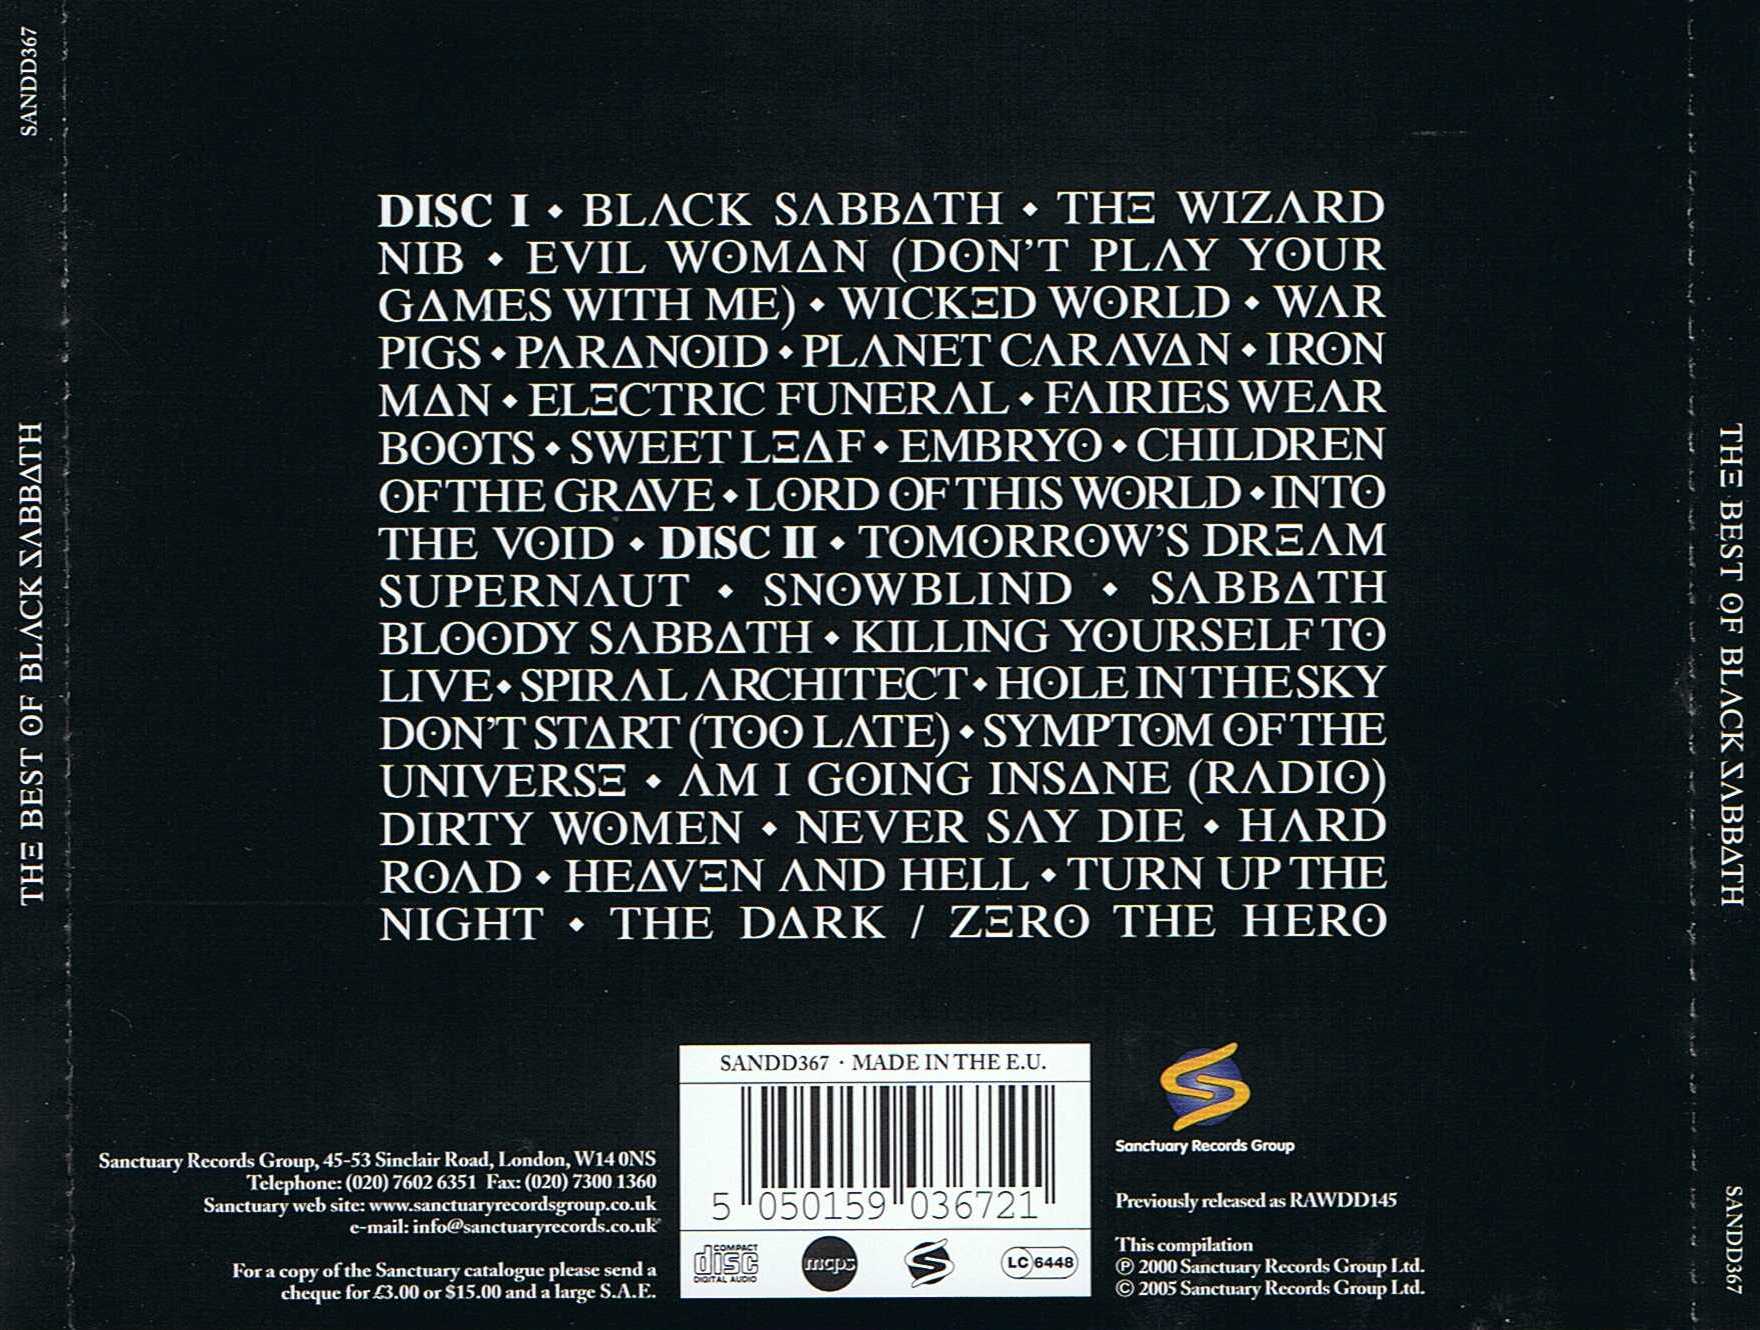 Tapio's Ronnie James Dio Pages: Black Sabbath Compilation CD 